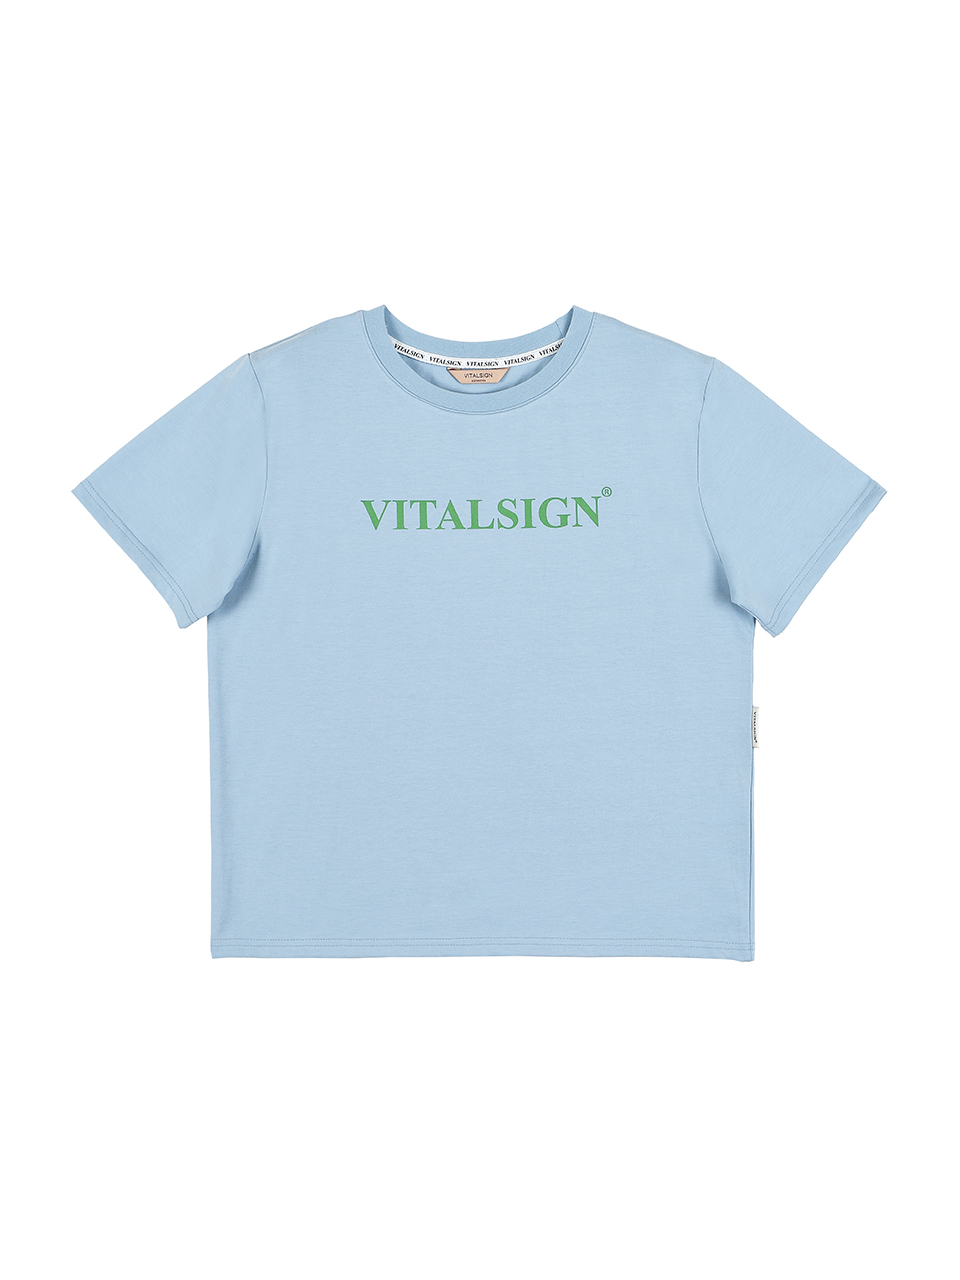 Vitalsign Signature T-shirt (Lightblue)